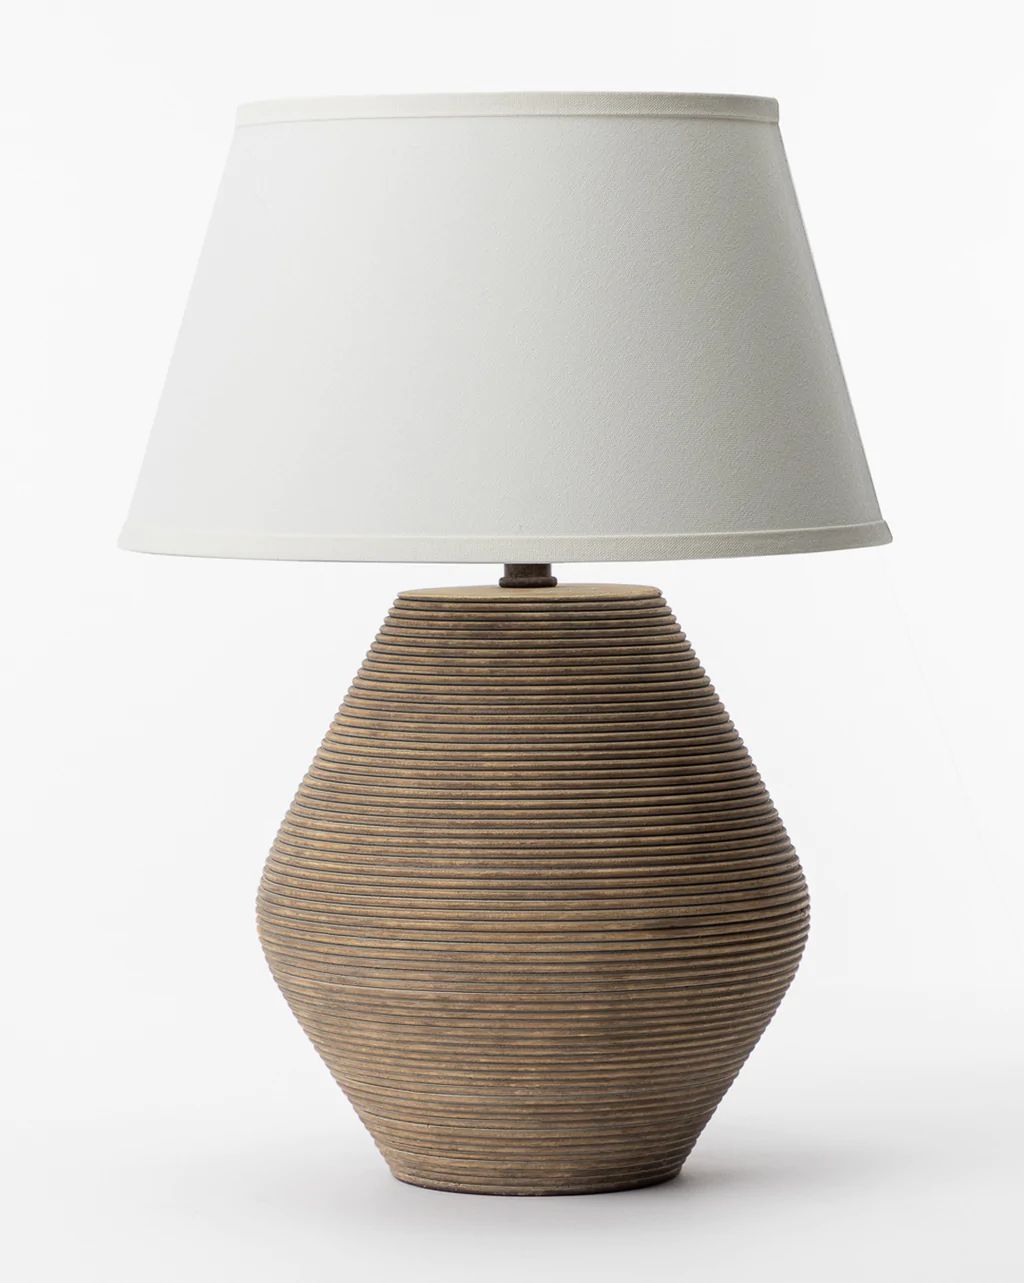 Rustco Table Lamp | McGee & Co.